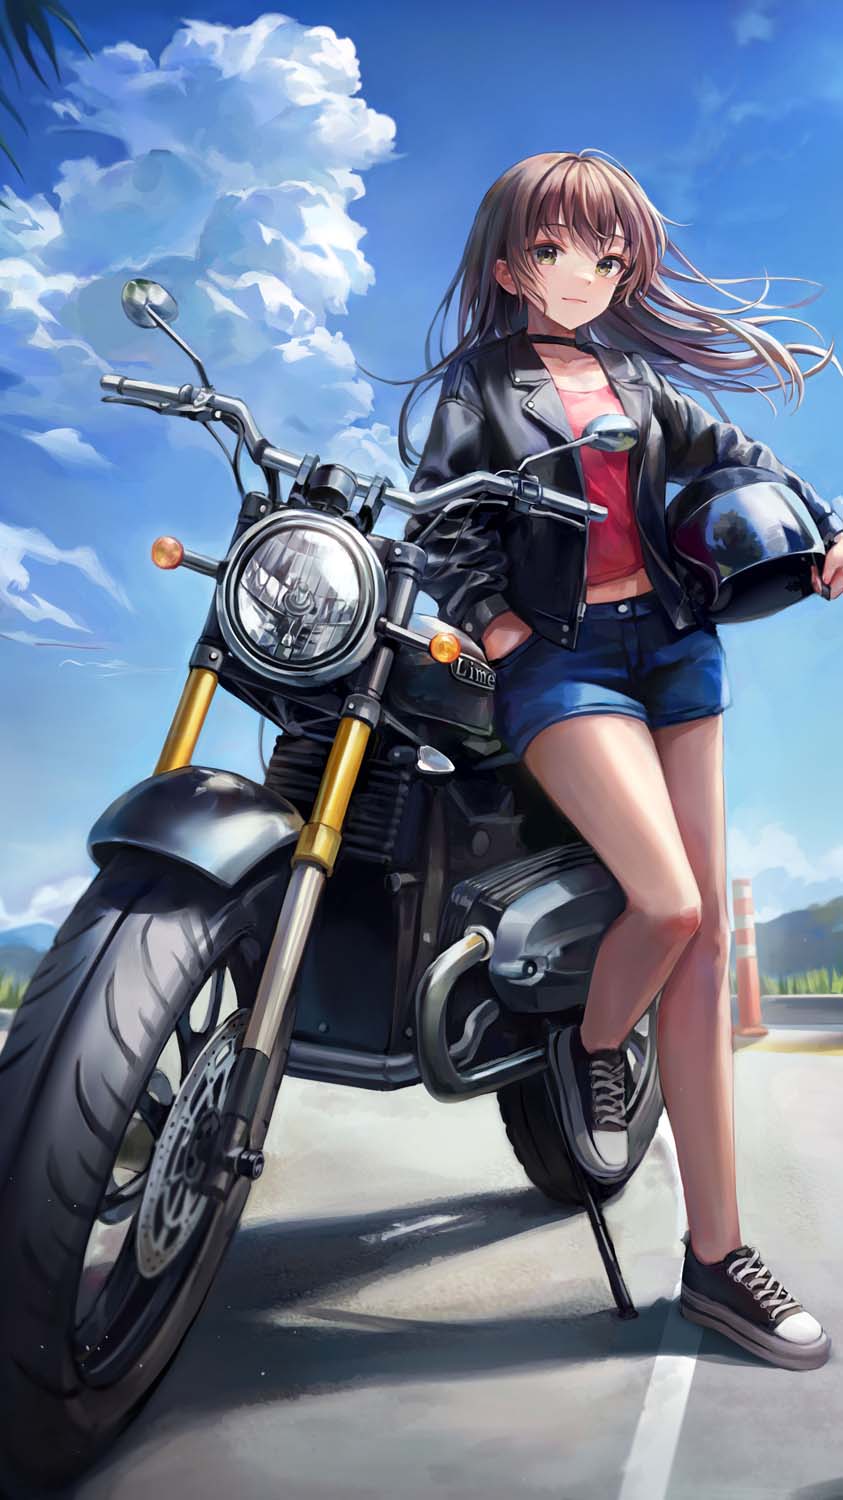 Biker Girl Anime IPhone Wallpaper HD - IPhone Wallpapers : iPhone Wallpapers